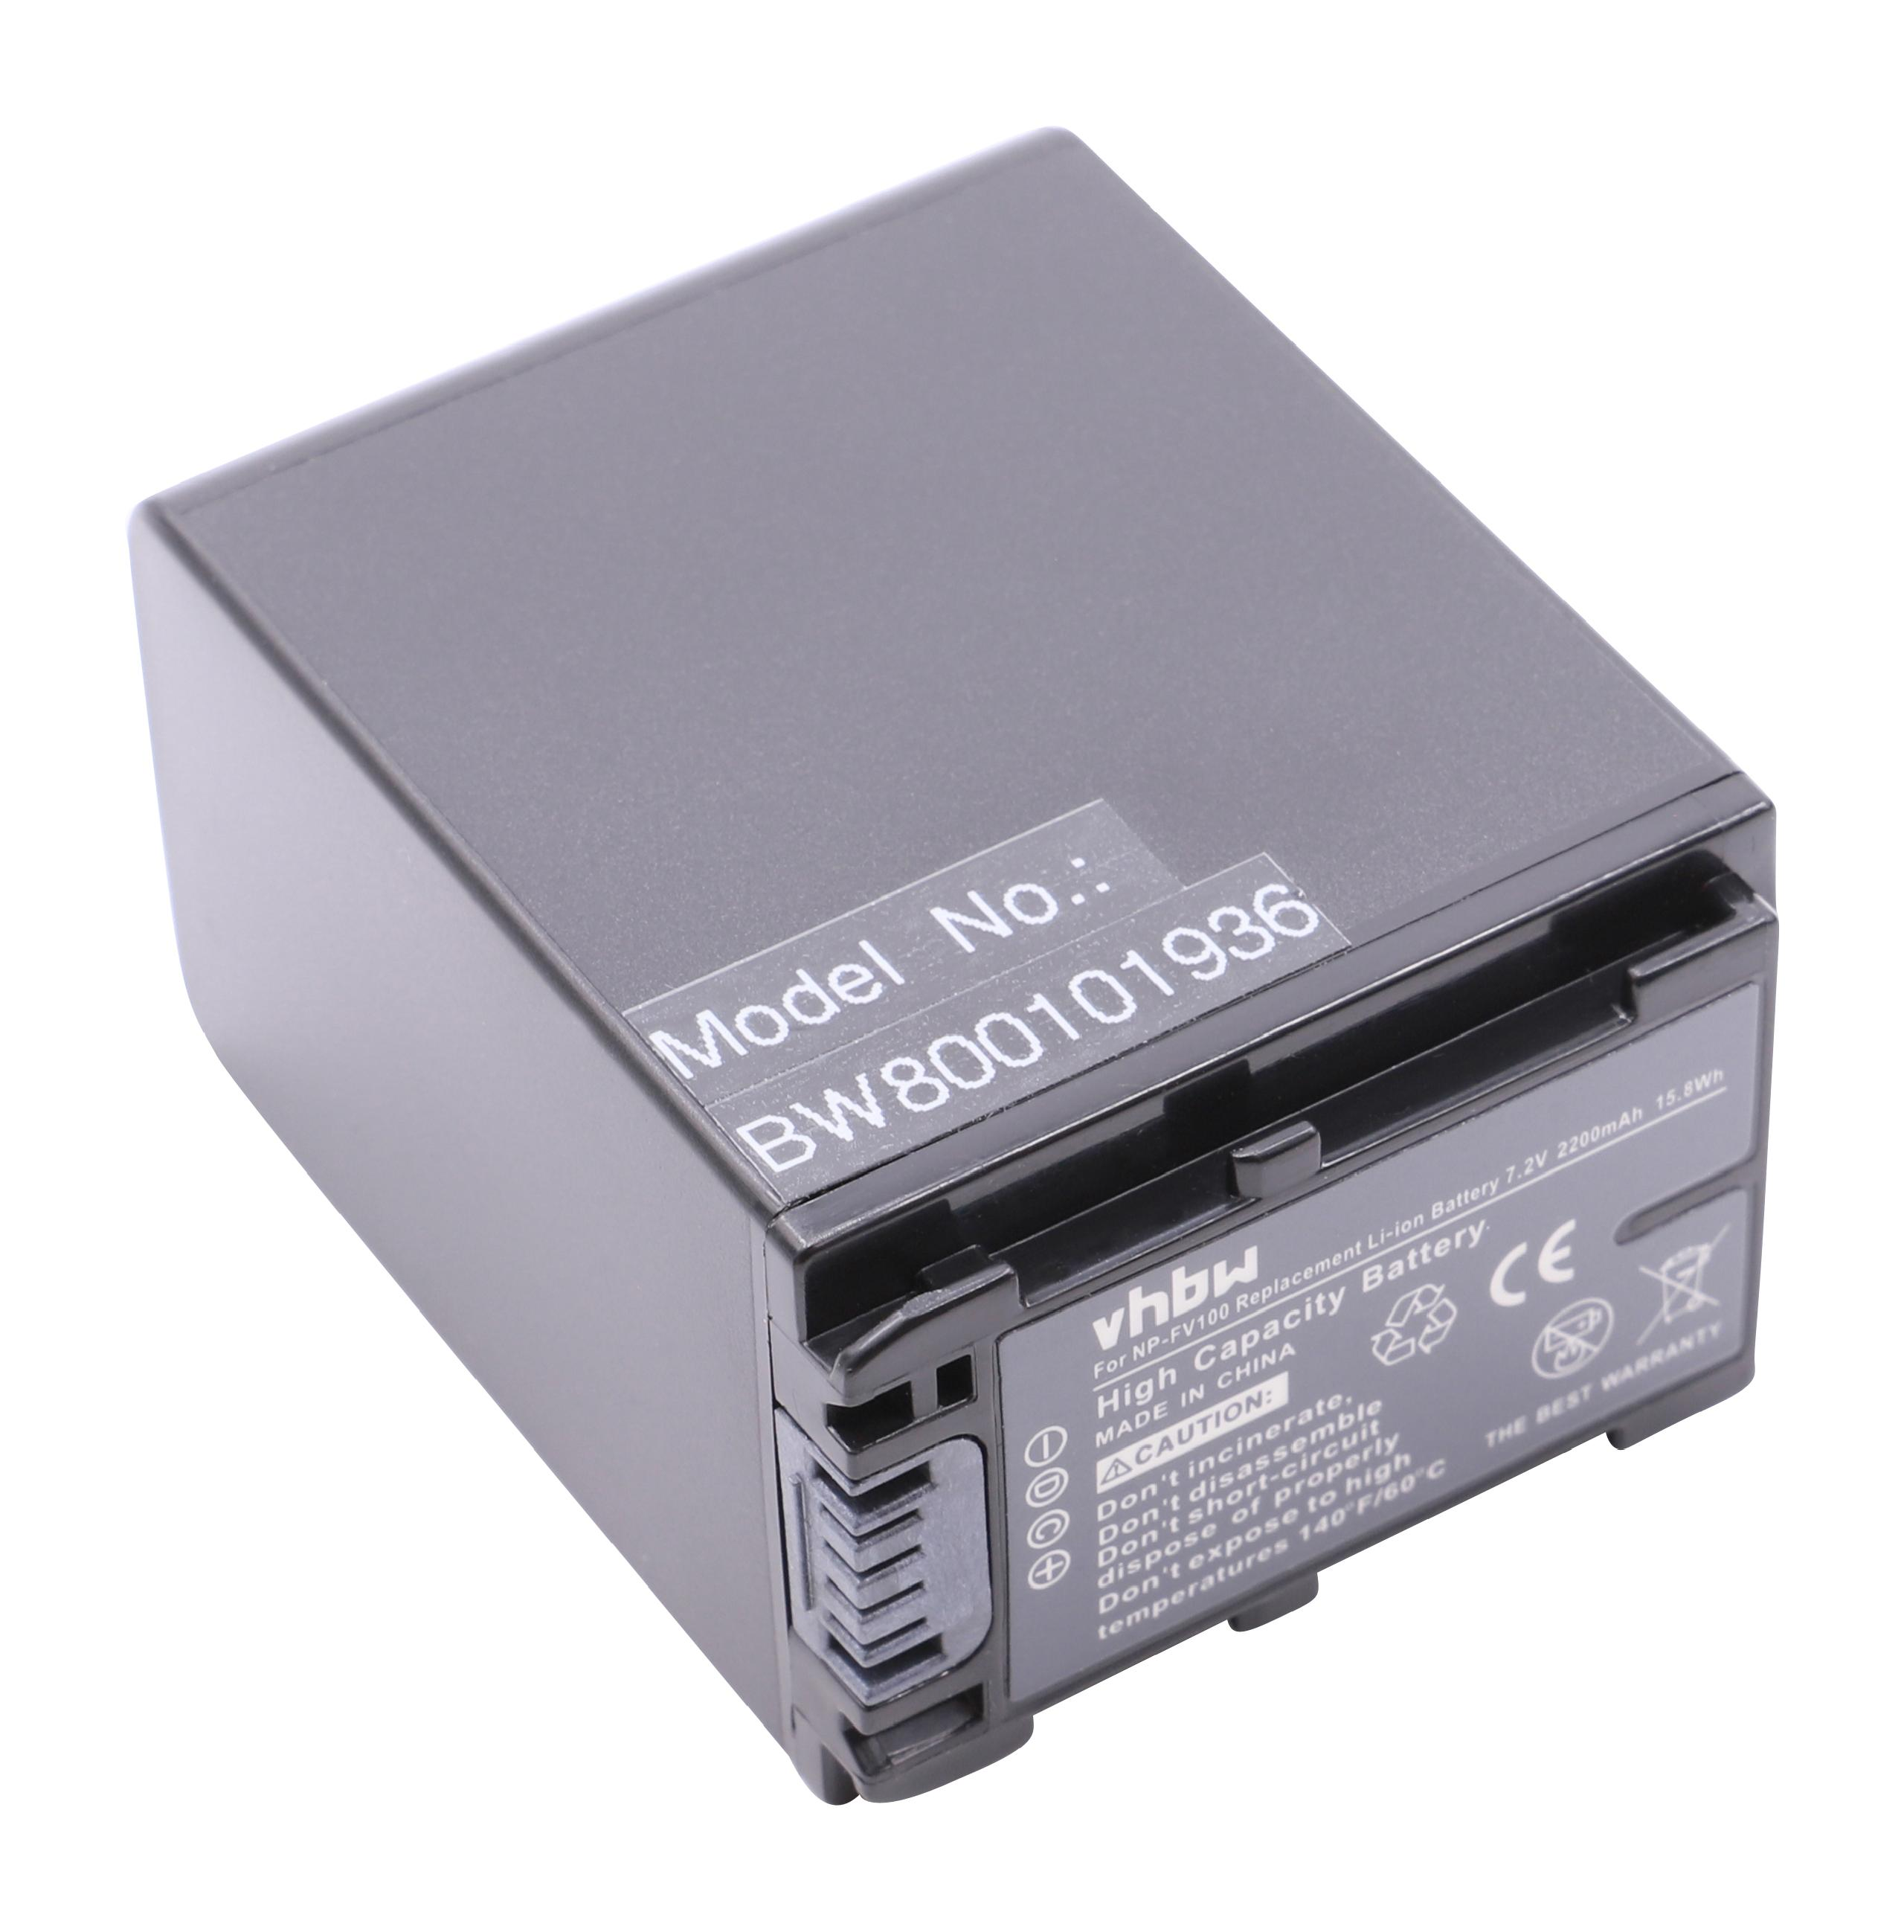 HDR-CX350E, mit HDR-CX360E Akku HDR-CX350VE, HDR-CX320EB, Videokamera, HDR-CX360, Li-Ion 7.2 Sony 2200 VHBW kompatibel - Volt,